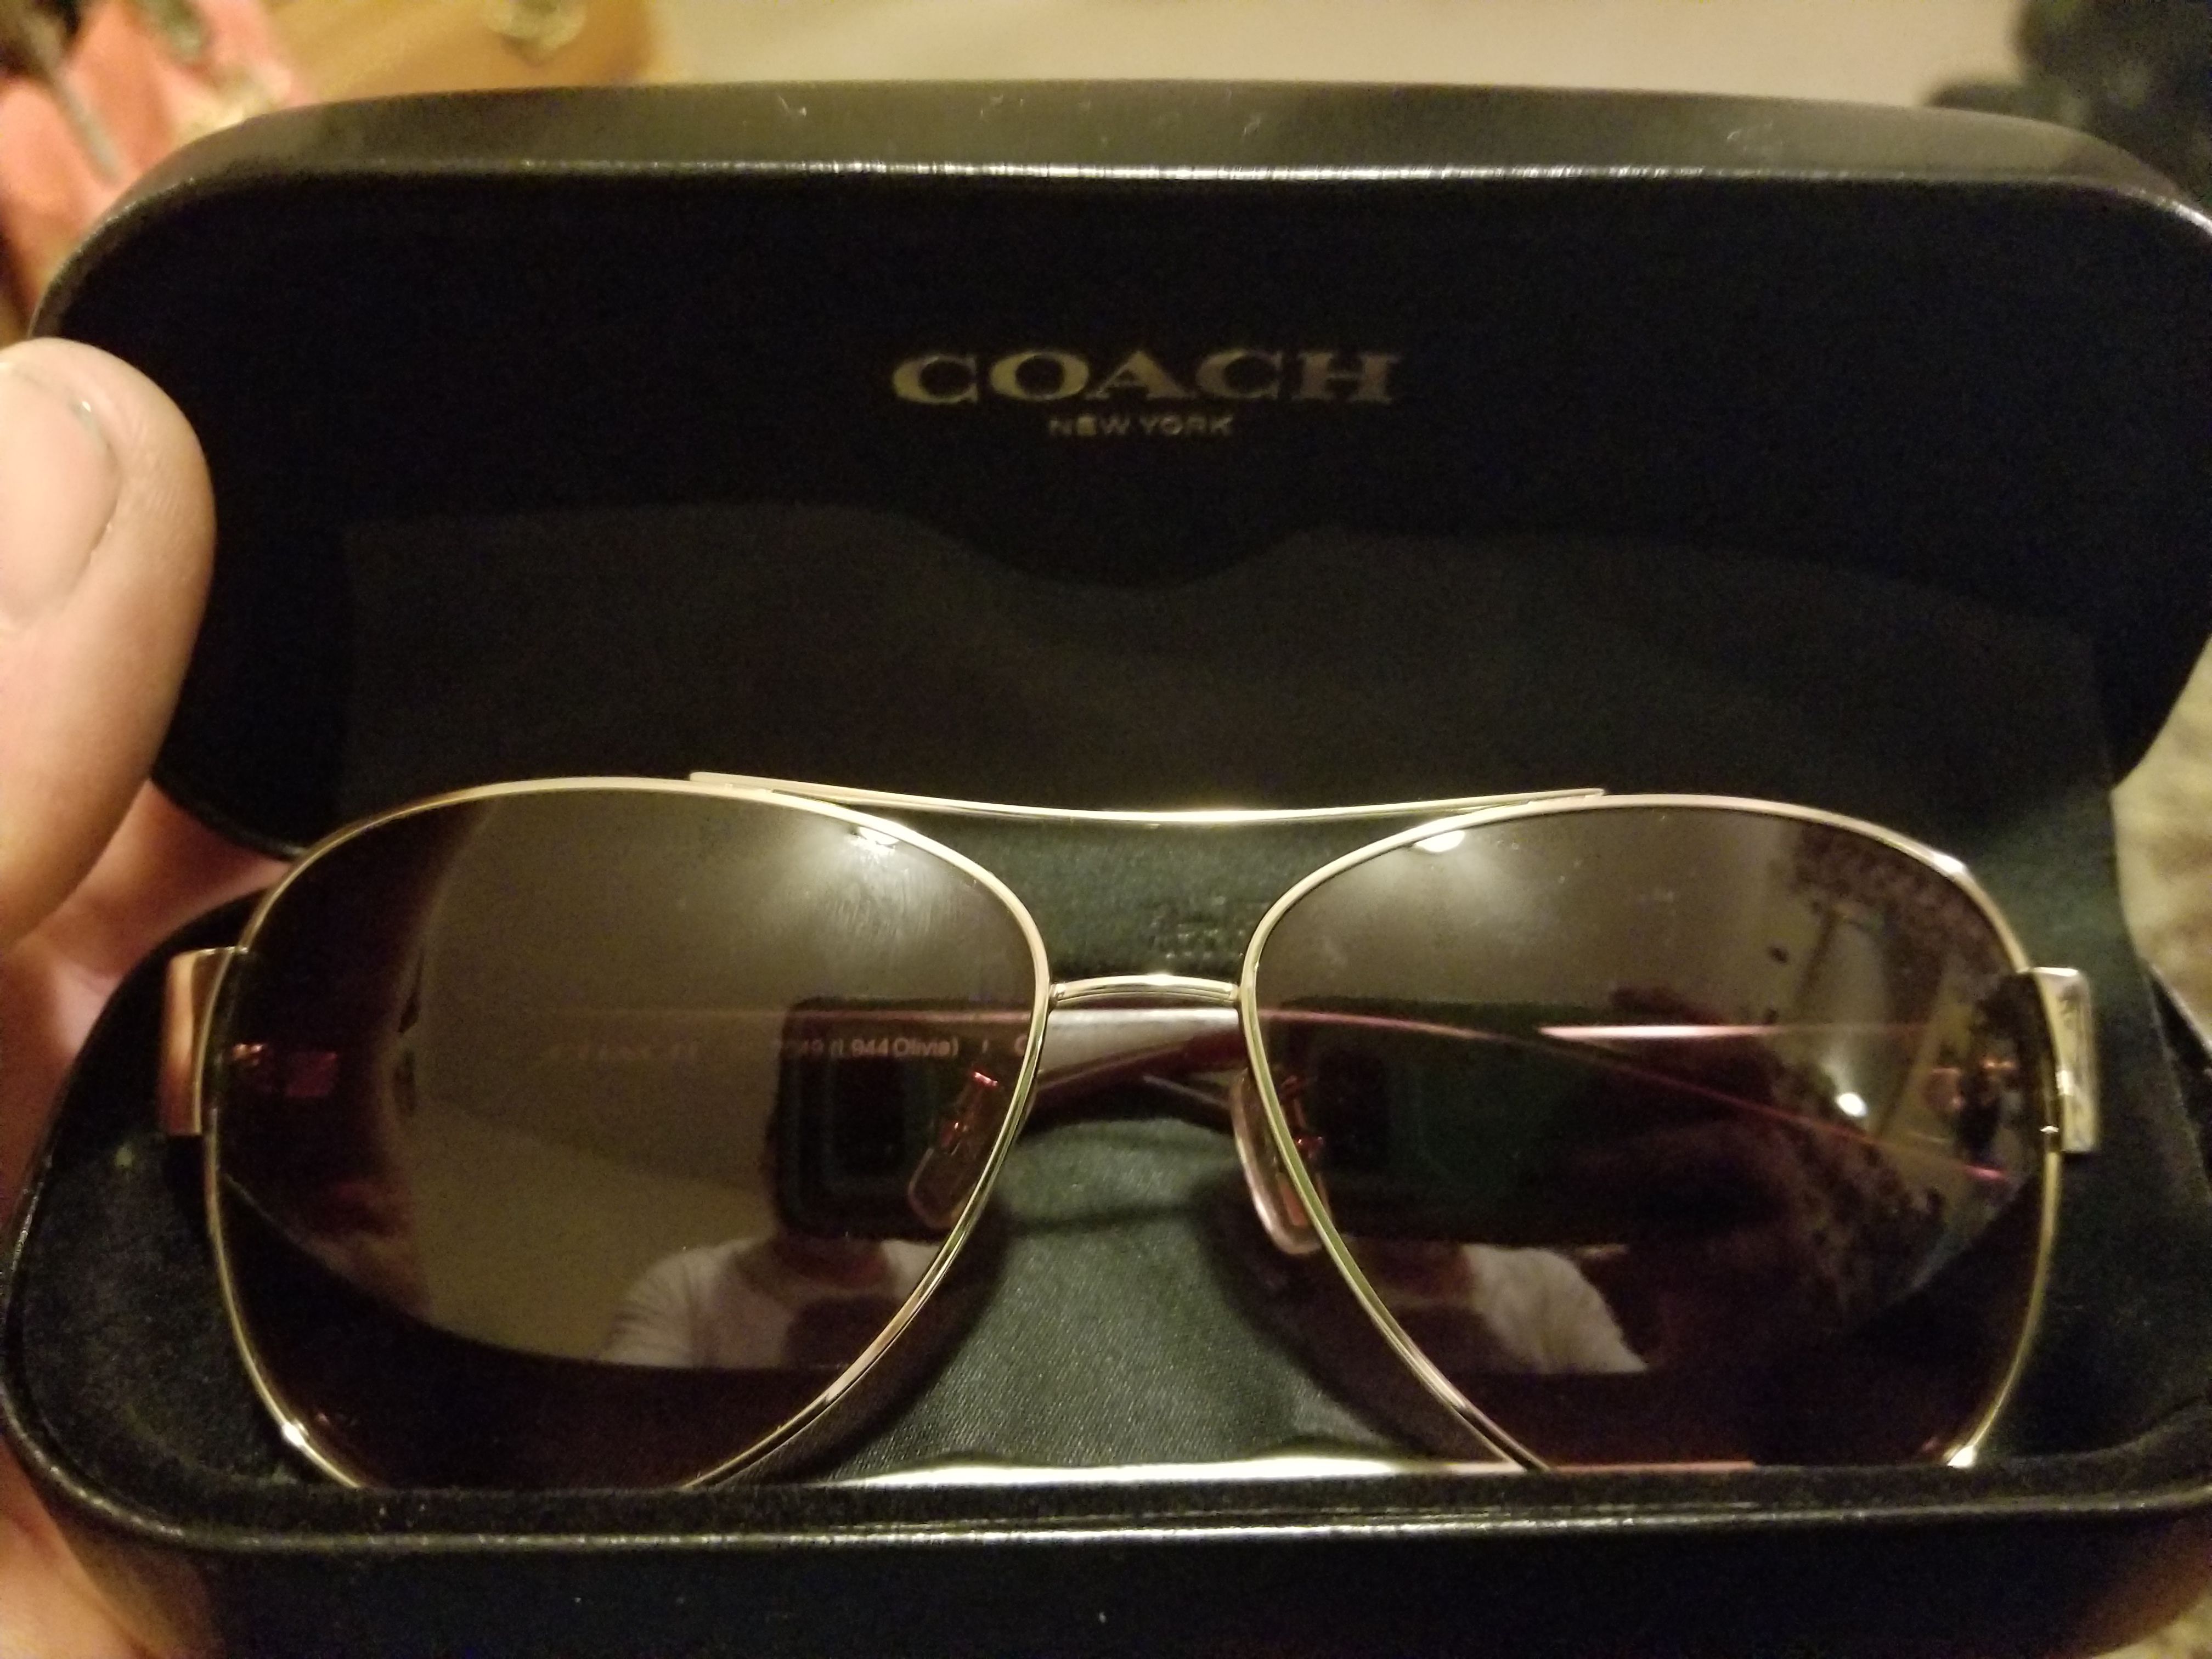 New Coach aviator sunglasses.